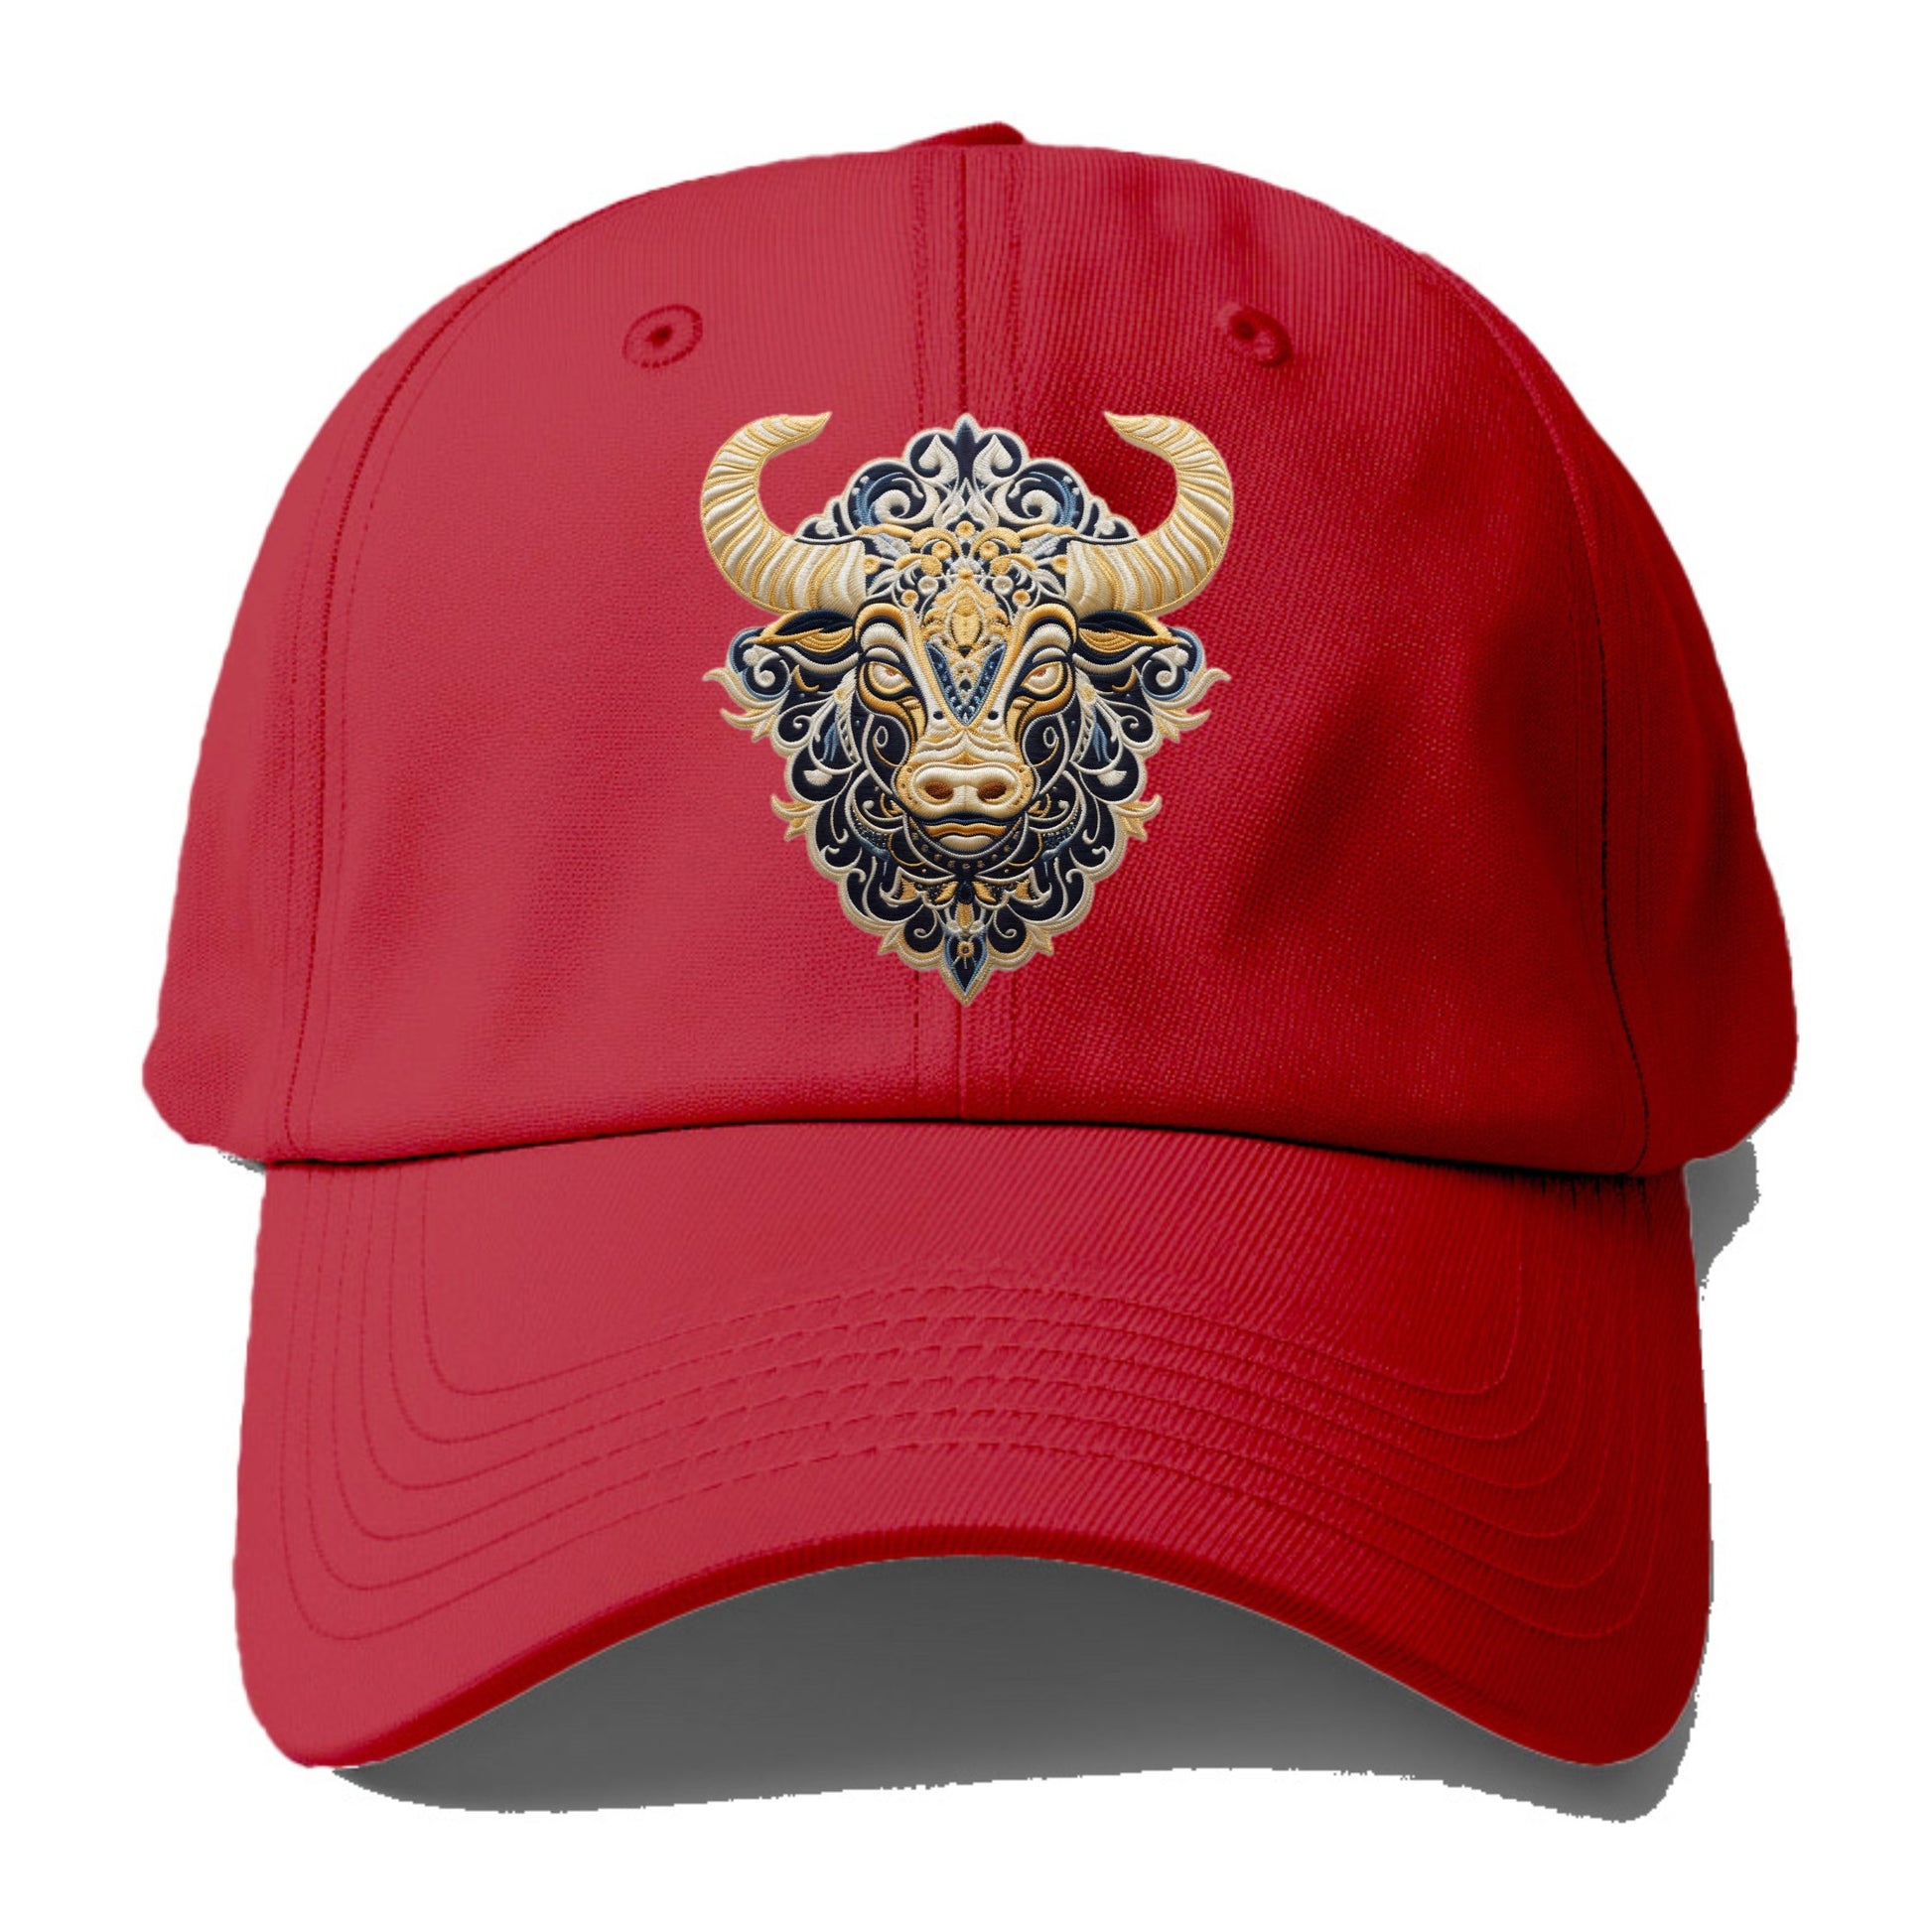 Taurus Zodiac Sign Hat